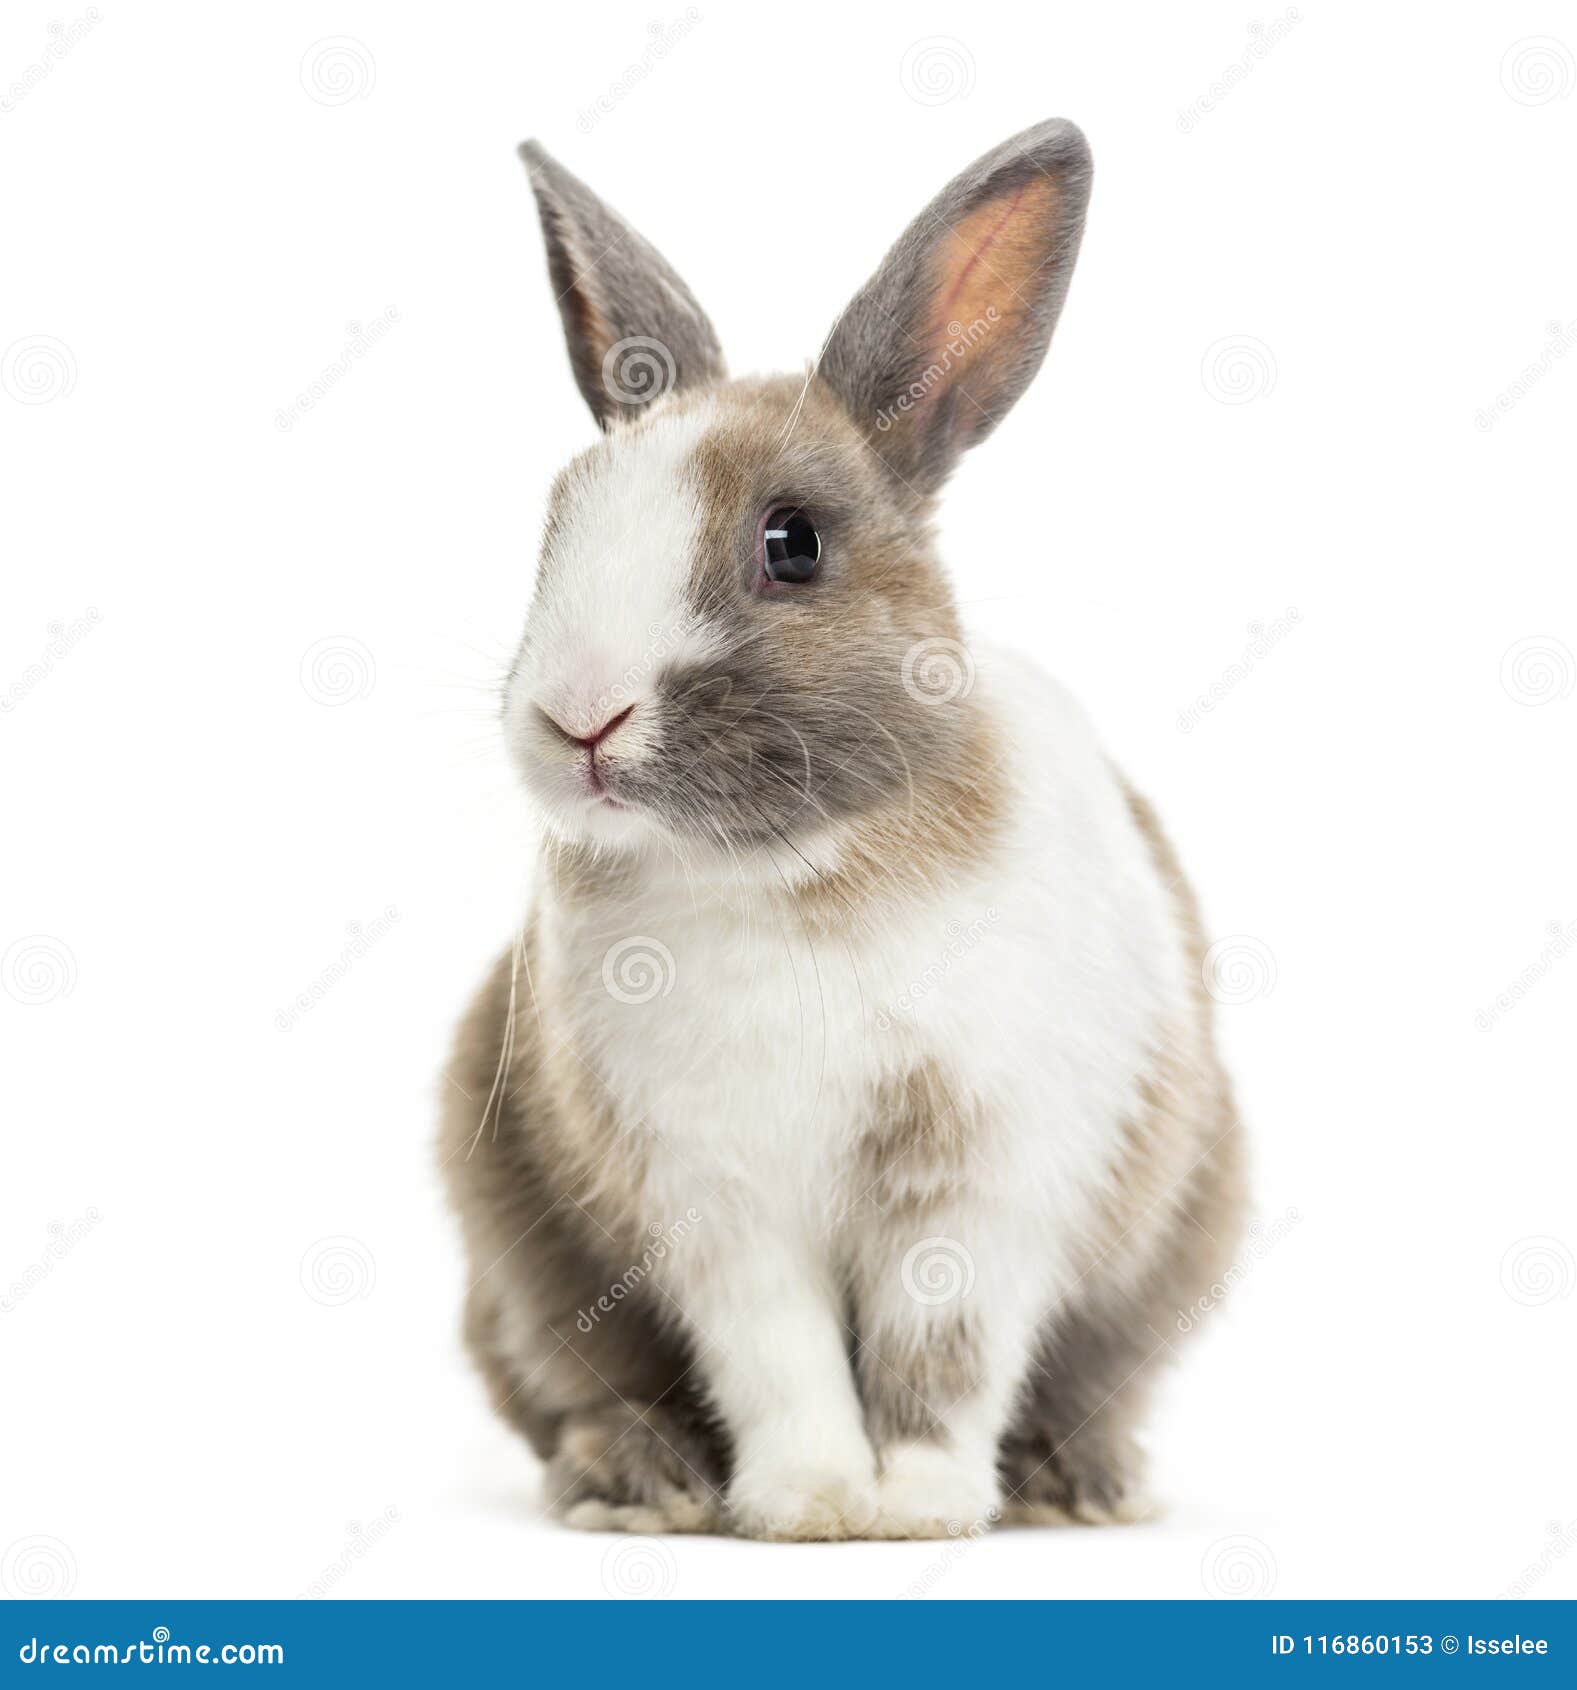 rabbit , 4 months old, sitting against white background